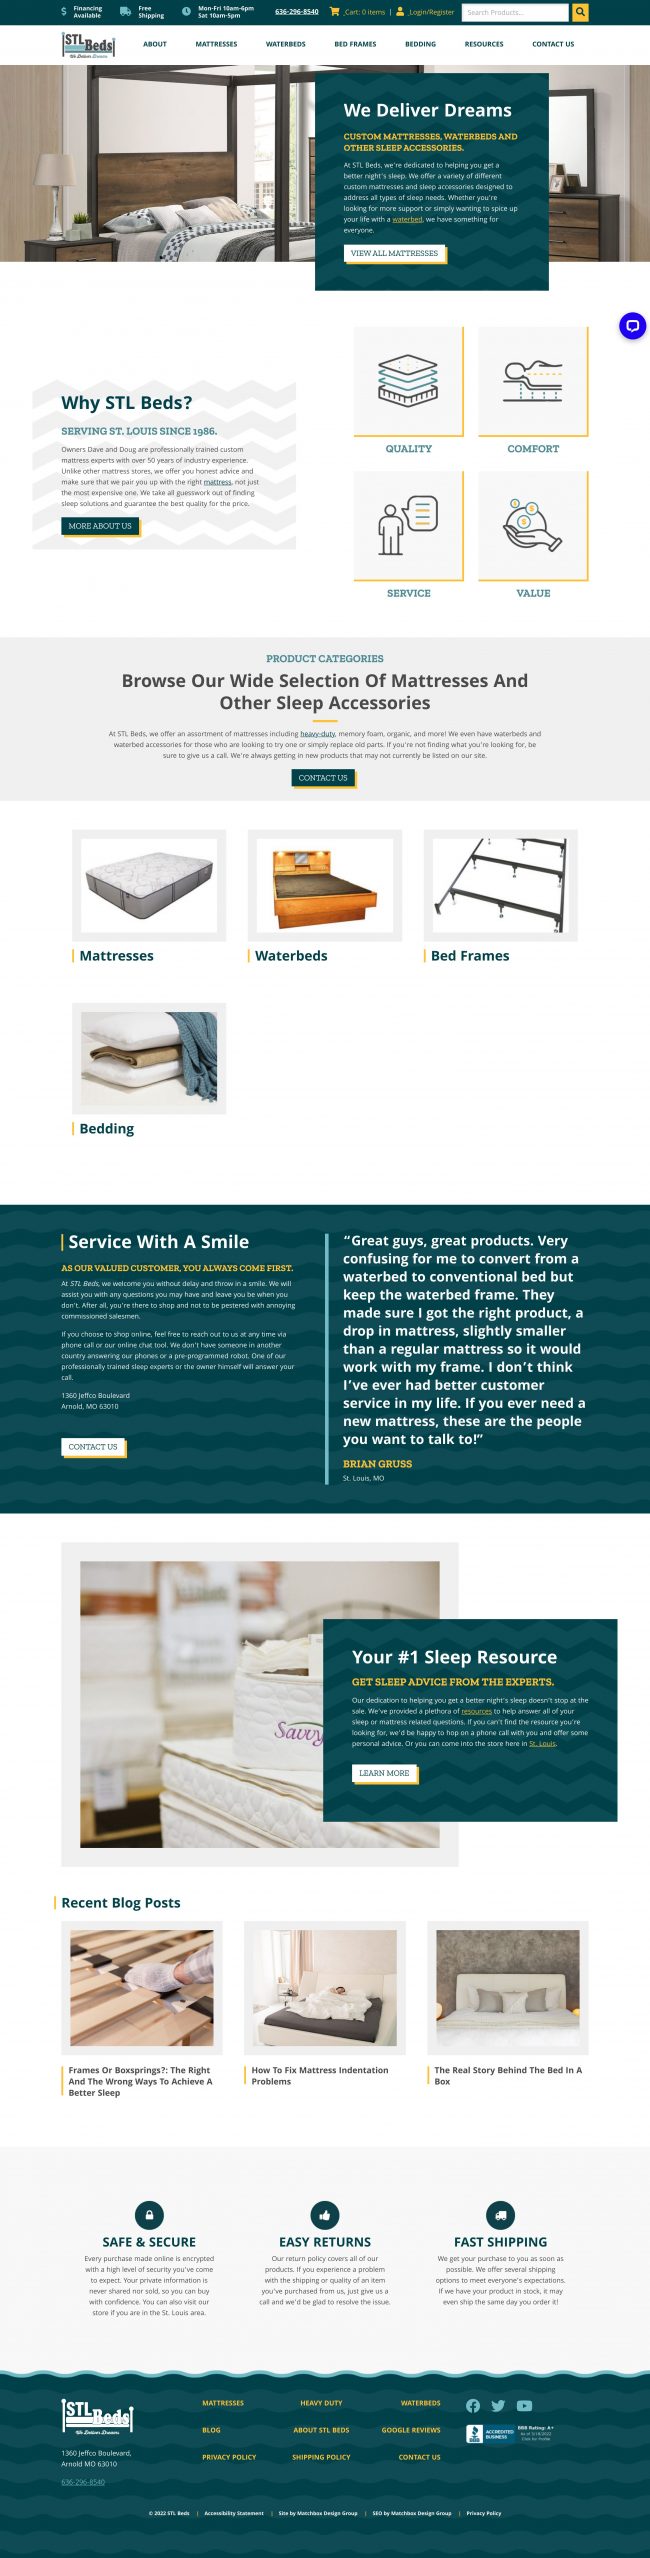 Stl Beds home page design